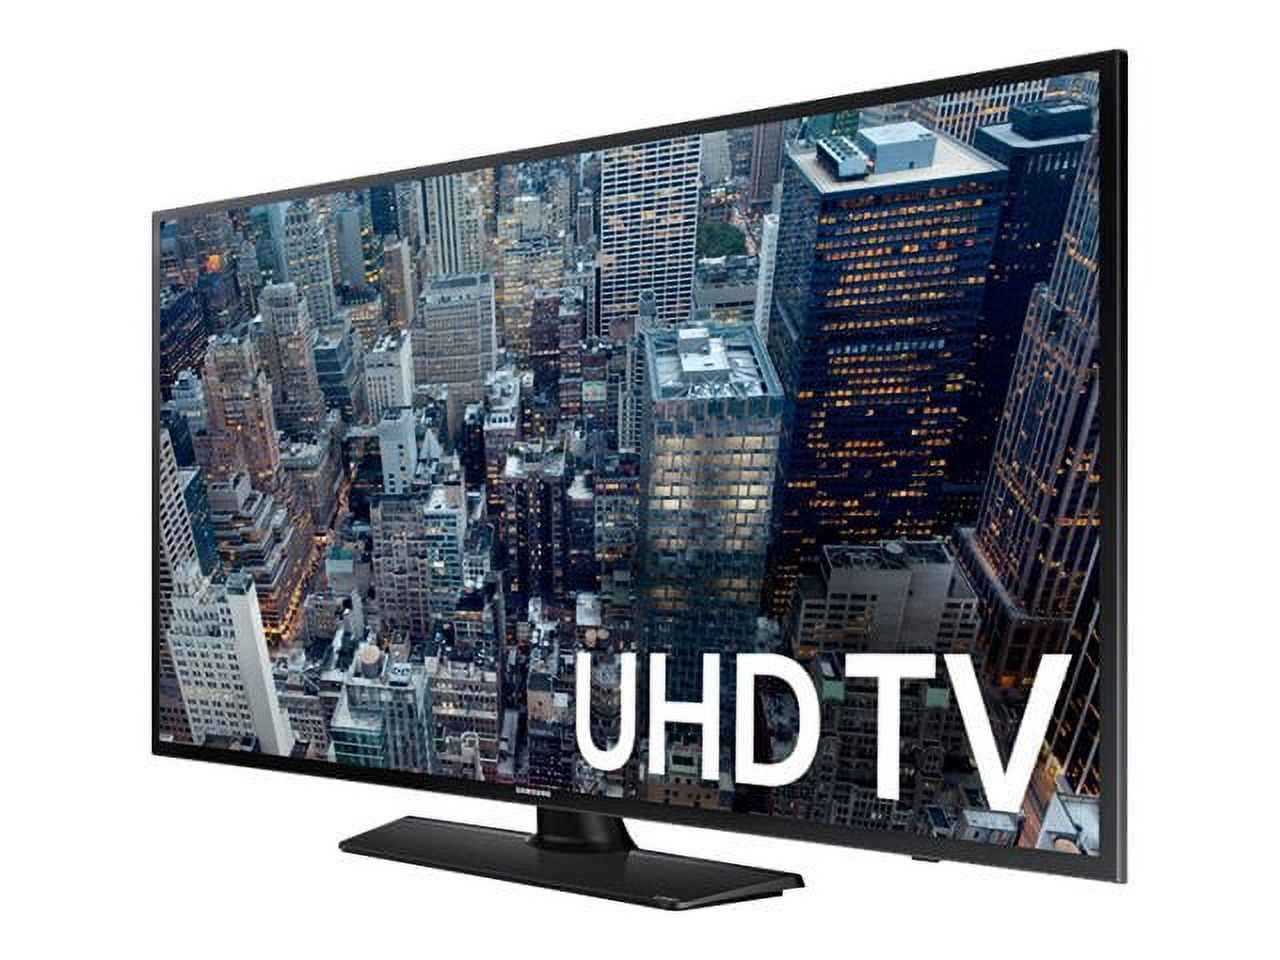 Samsung UN60JU6400F - 60" Diagonal Class 6 Series LED-backlit LCD TV - Smart TV - 4K UHD (2160p) 3840 x 2160 - black - image 1 of 12